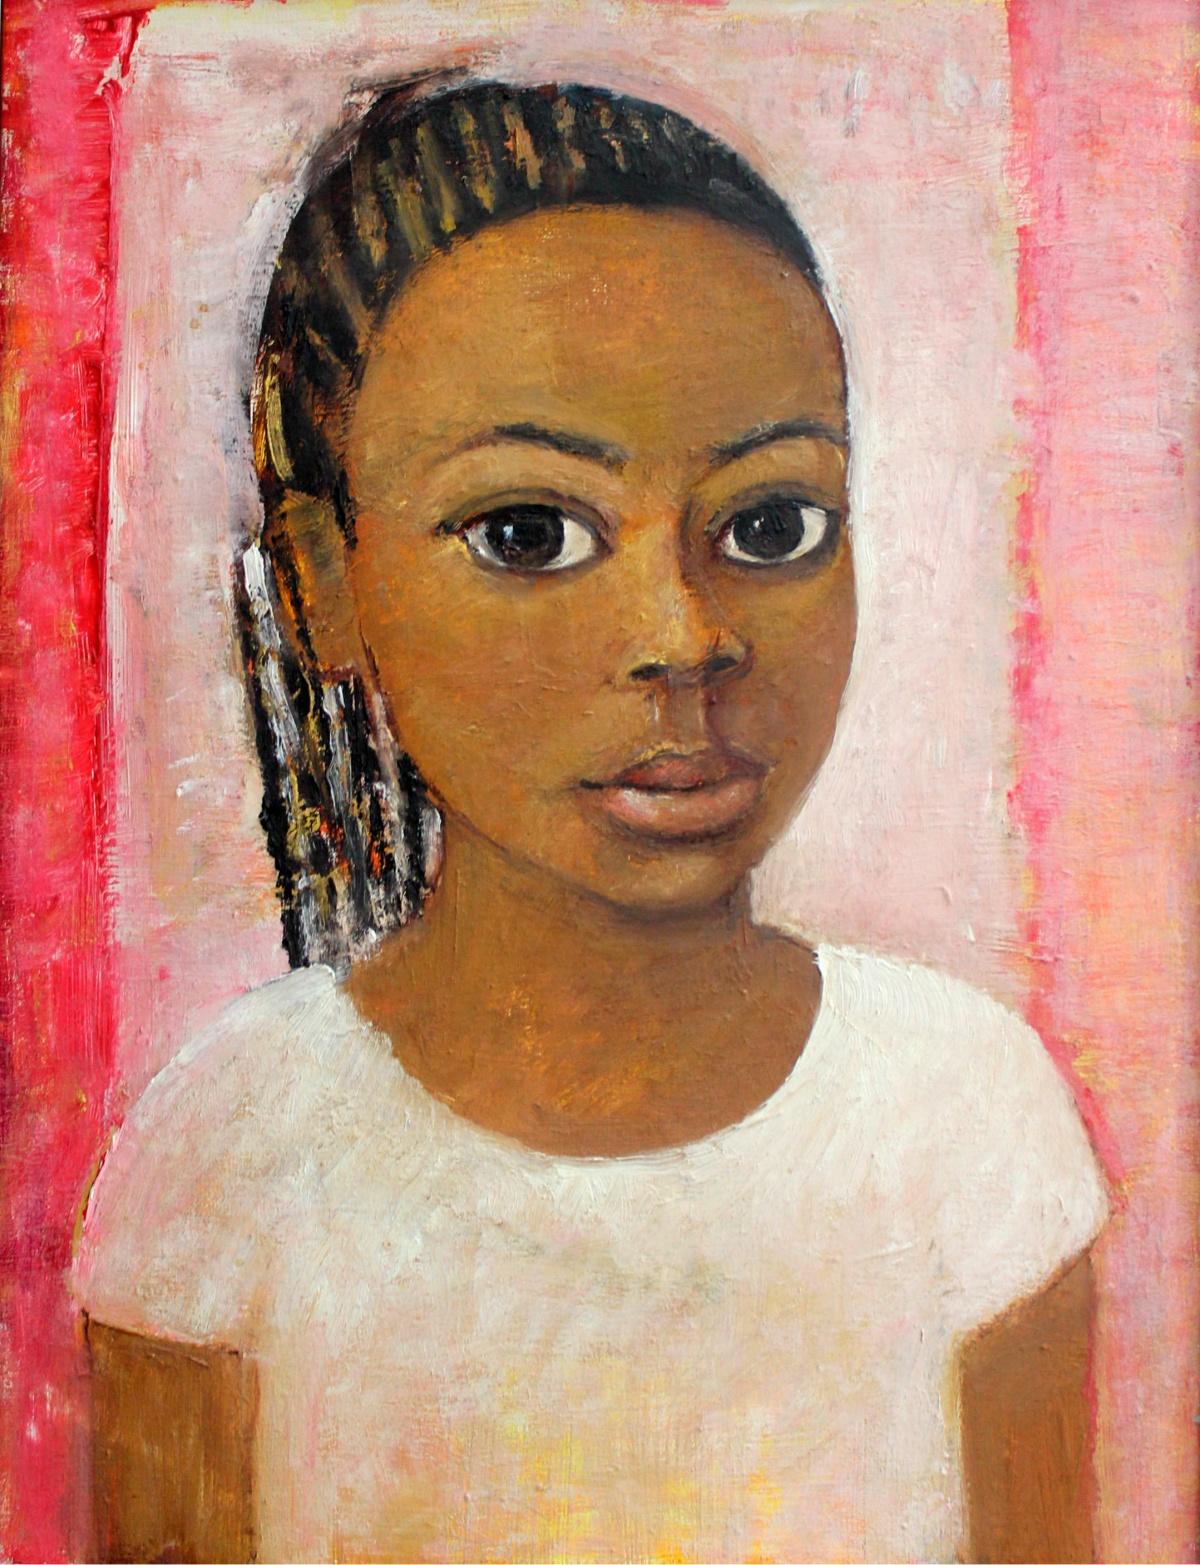 Marlena Nizio Figurative Painting - Portrait - XXI century, Oil figurative painting, Pink, Warm tones, Big eyes